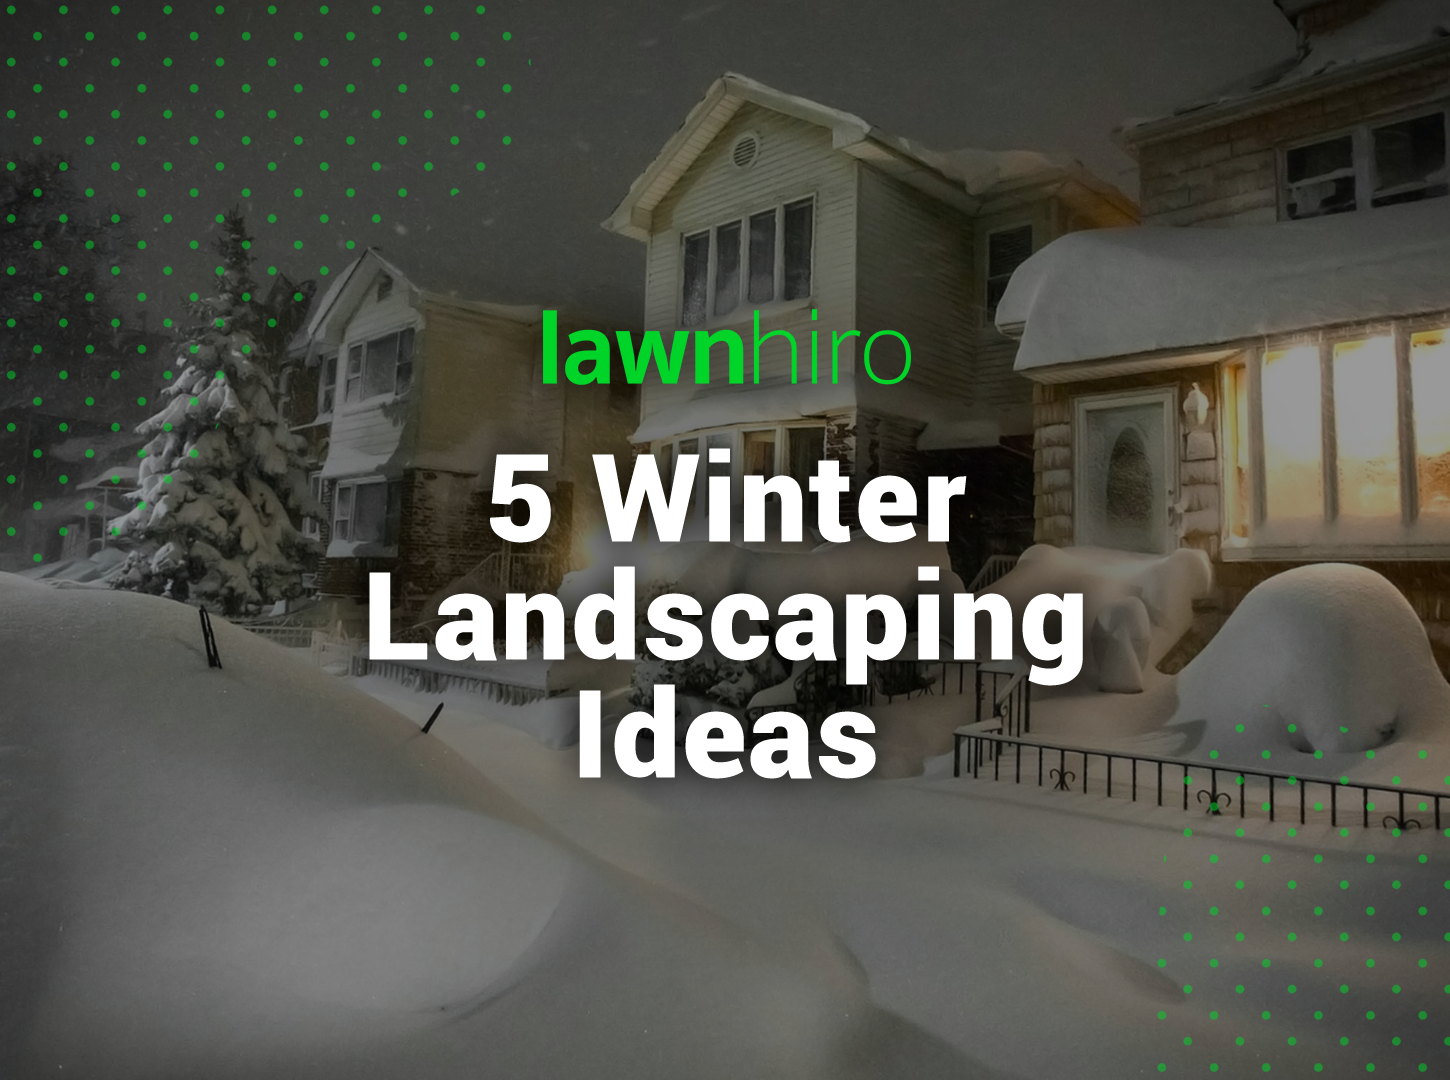 Winter landscaping ideas - Lawnhiro